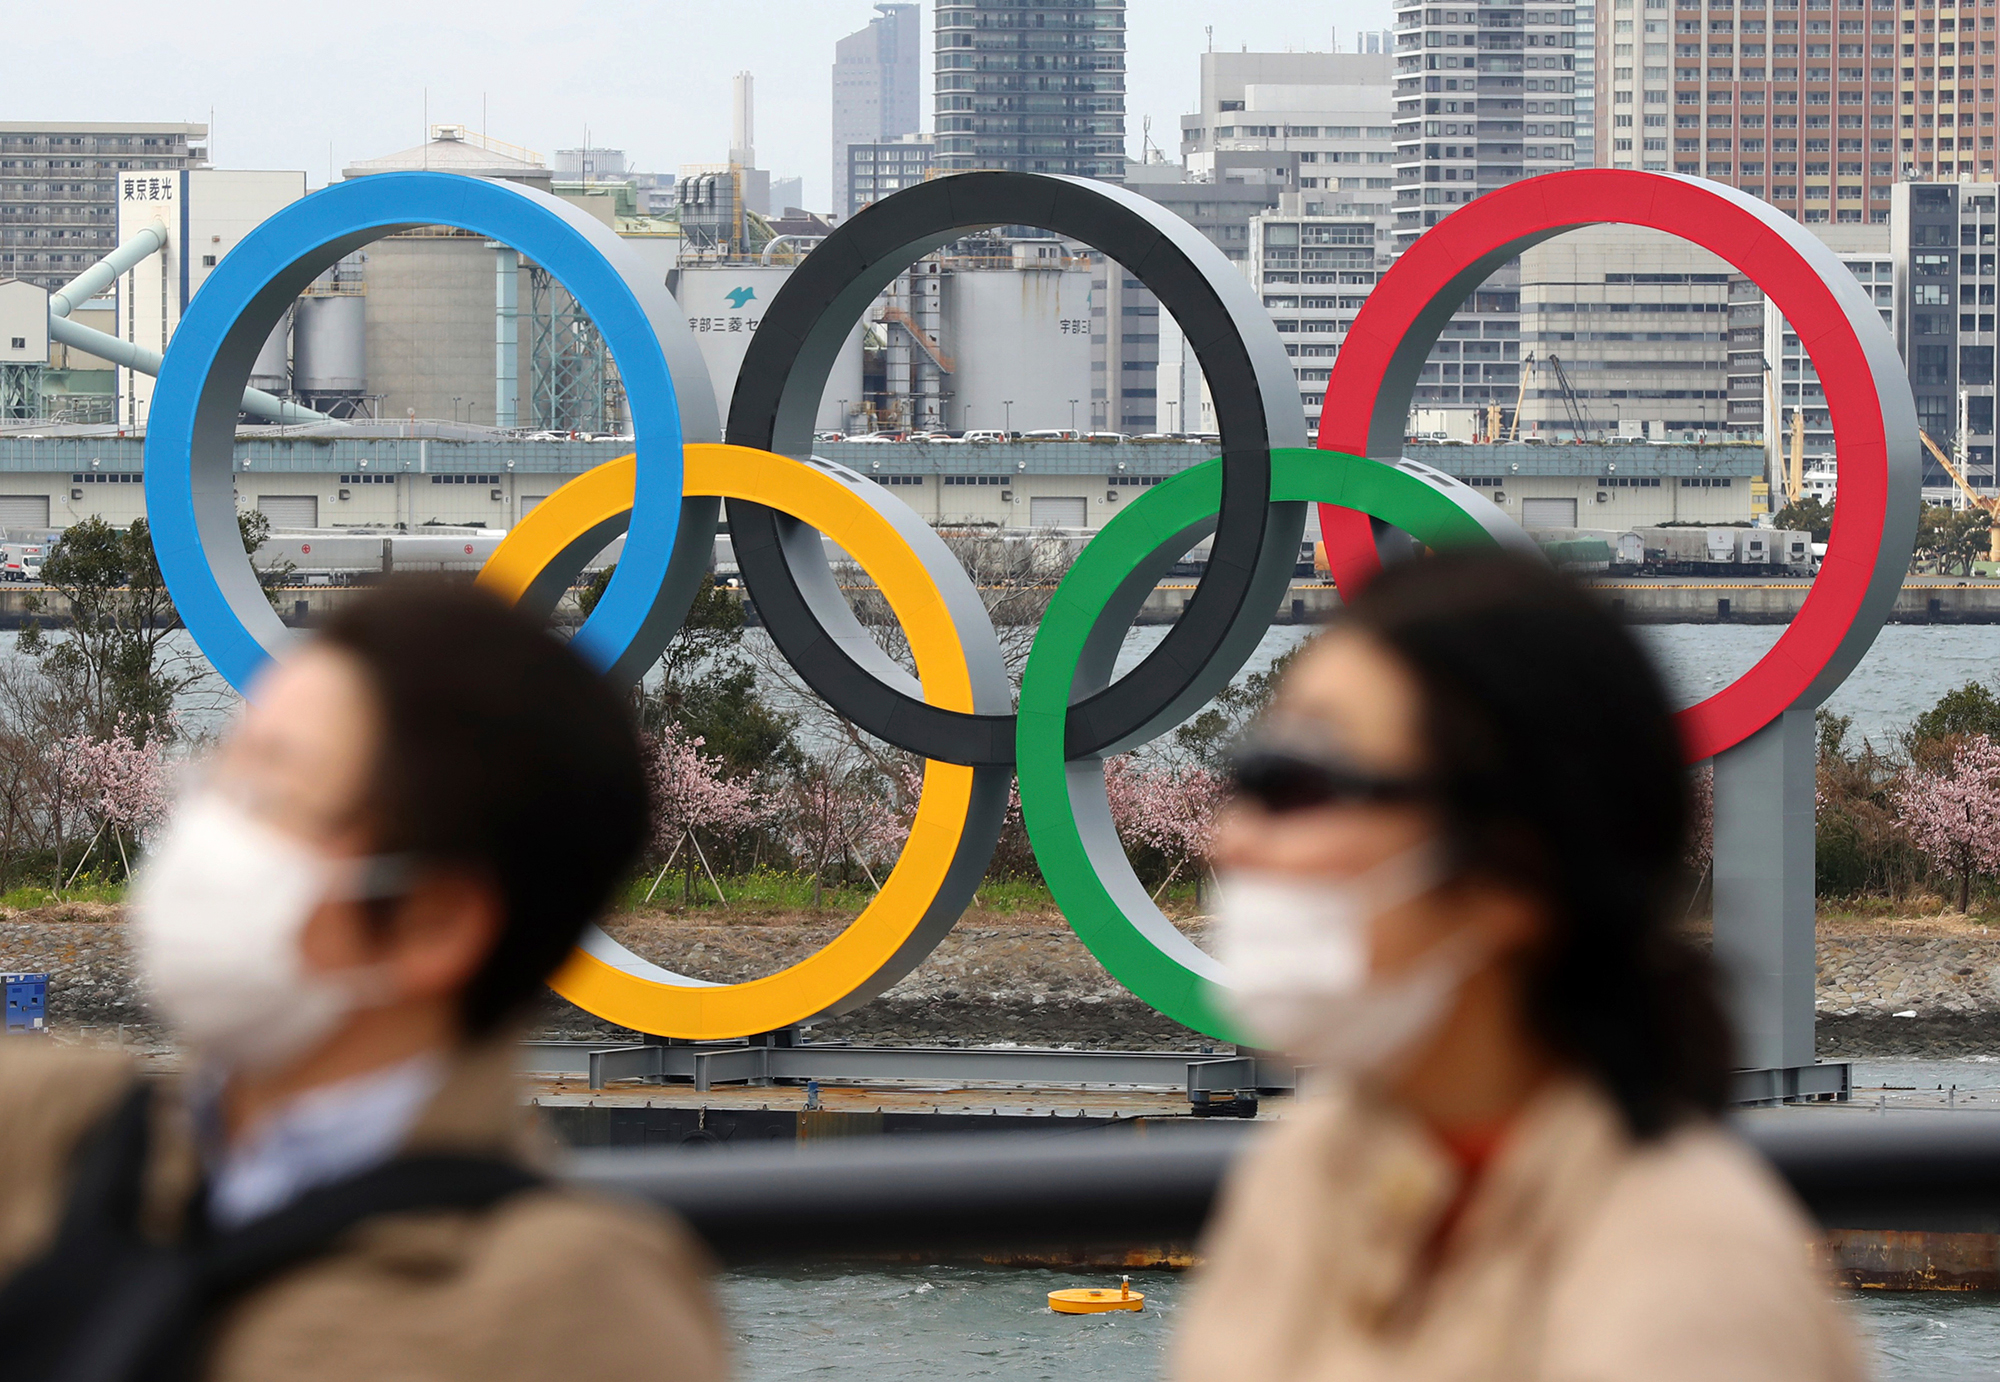 People walk near the Olympics rings in Odaiba, Tokyo on February 22.